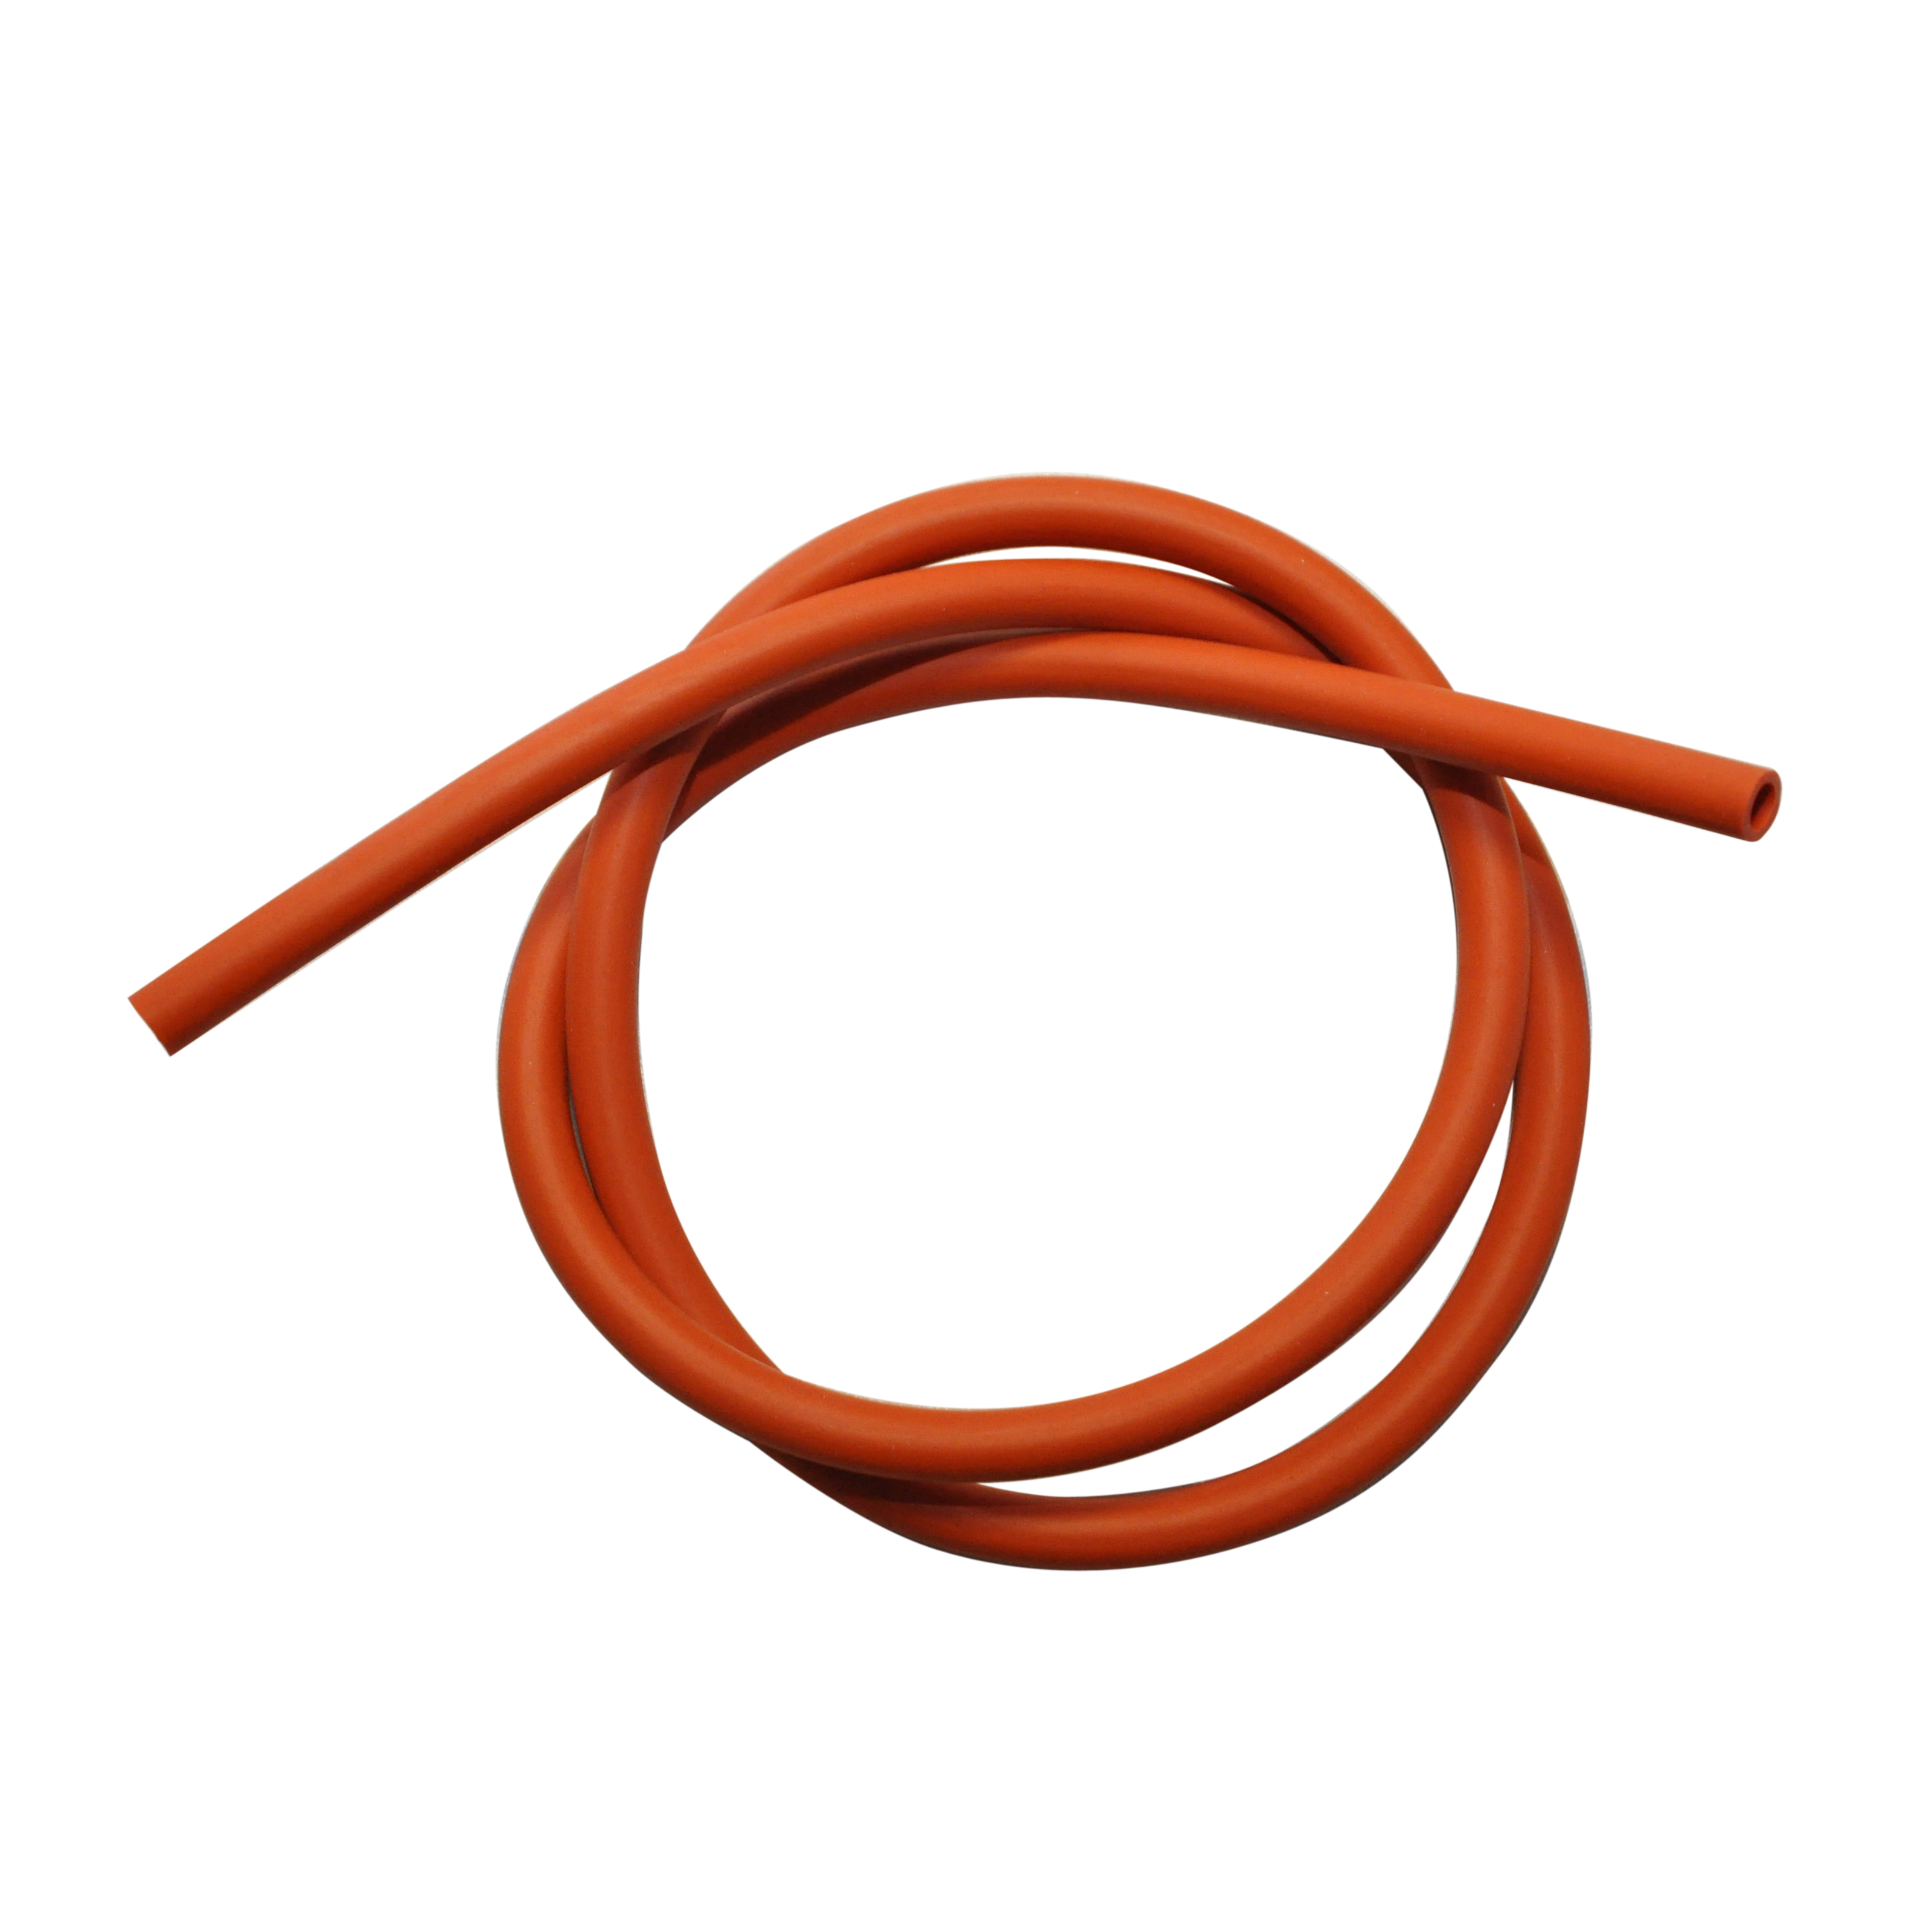 Rubber hose 5 x 1,5 mm, orange